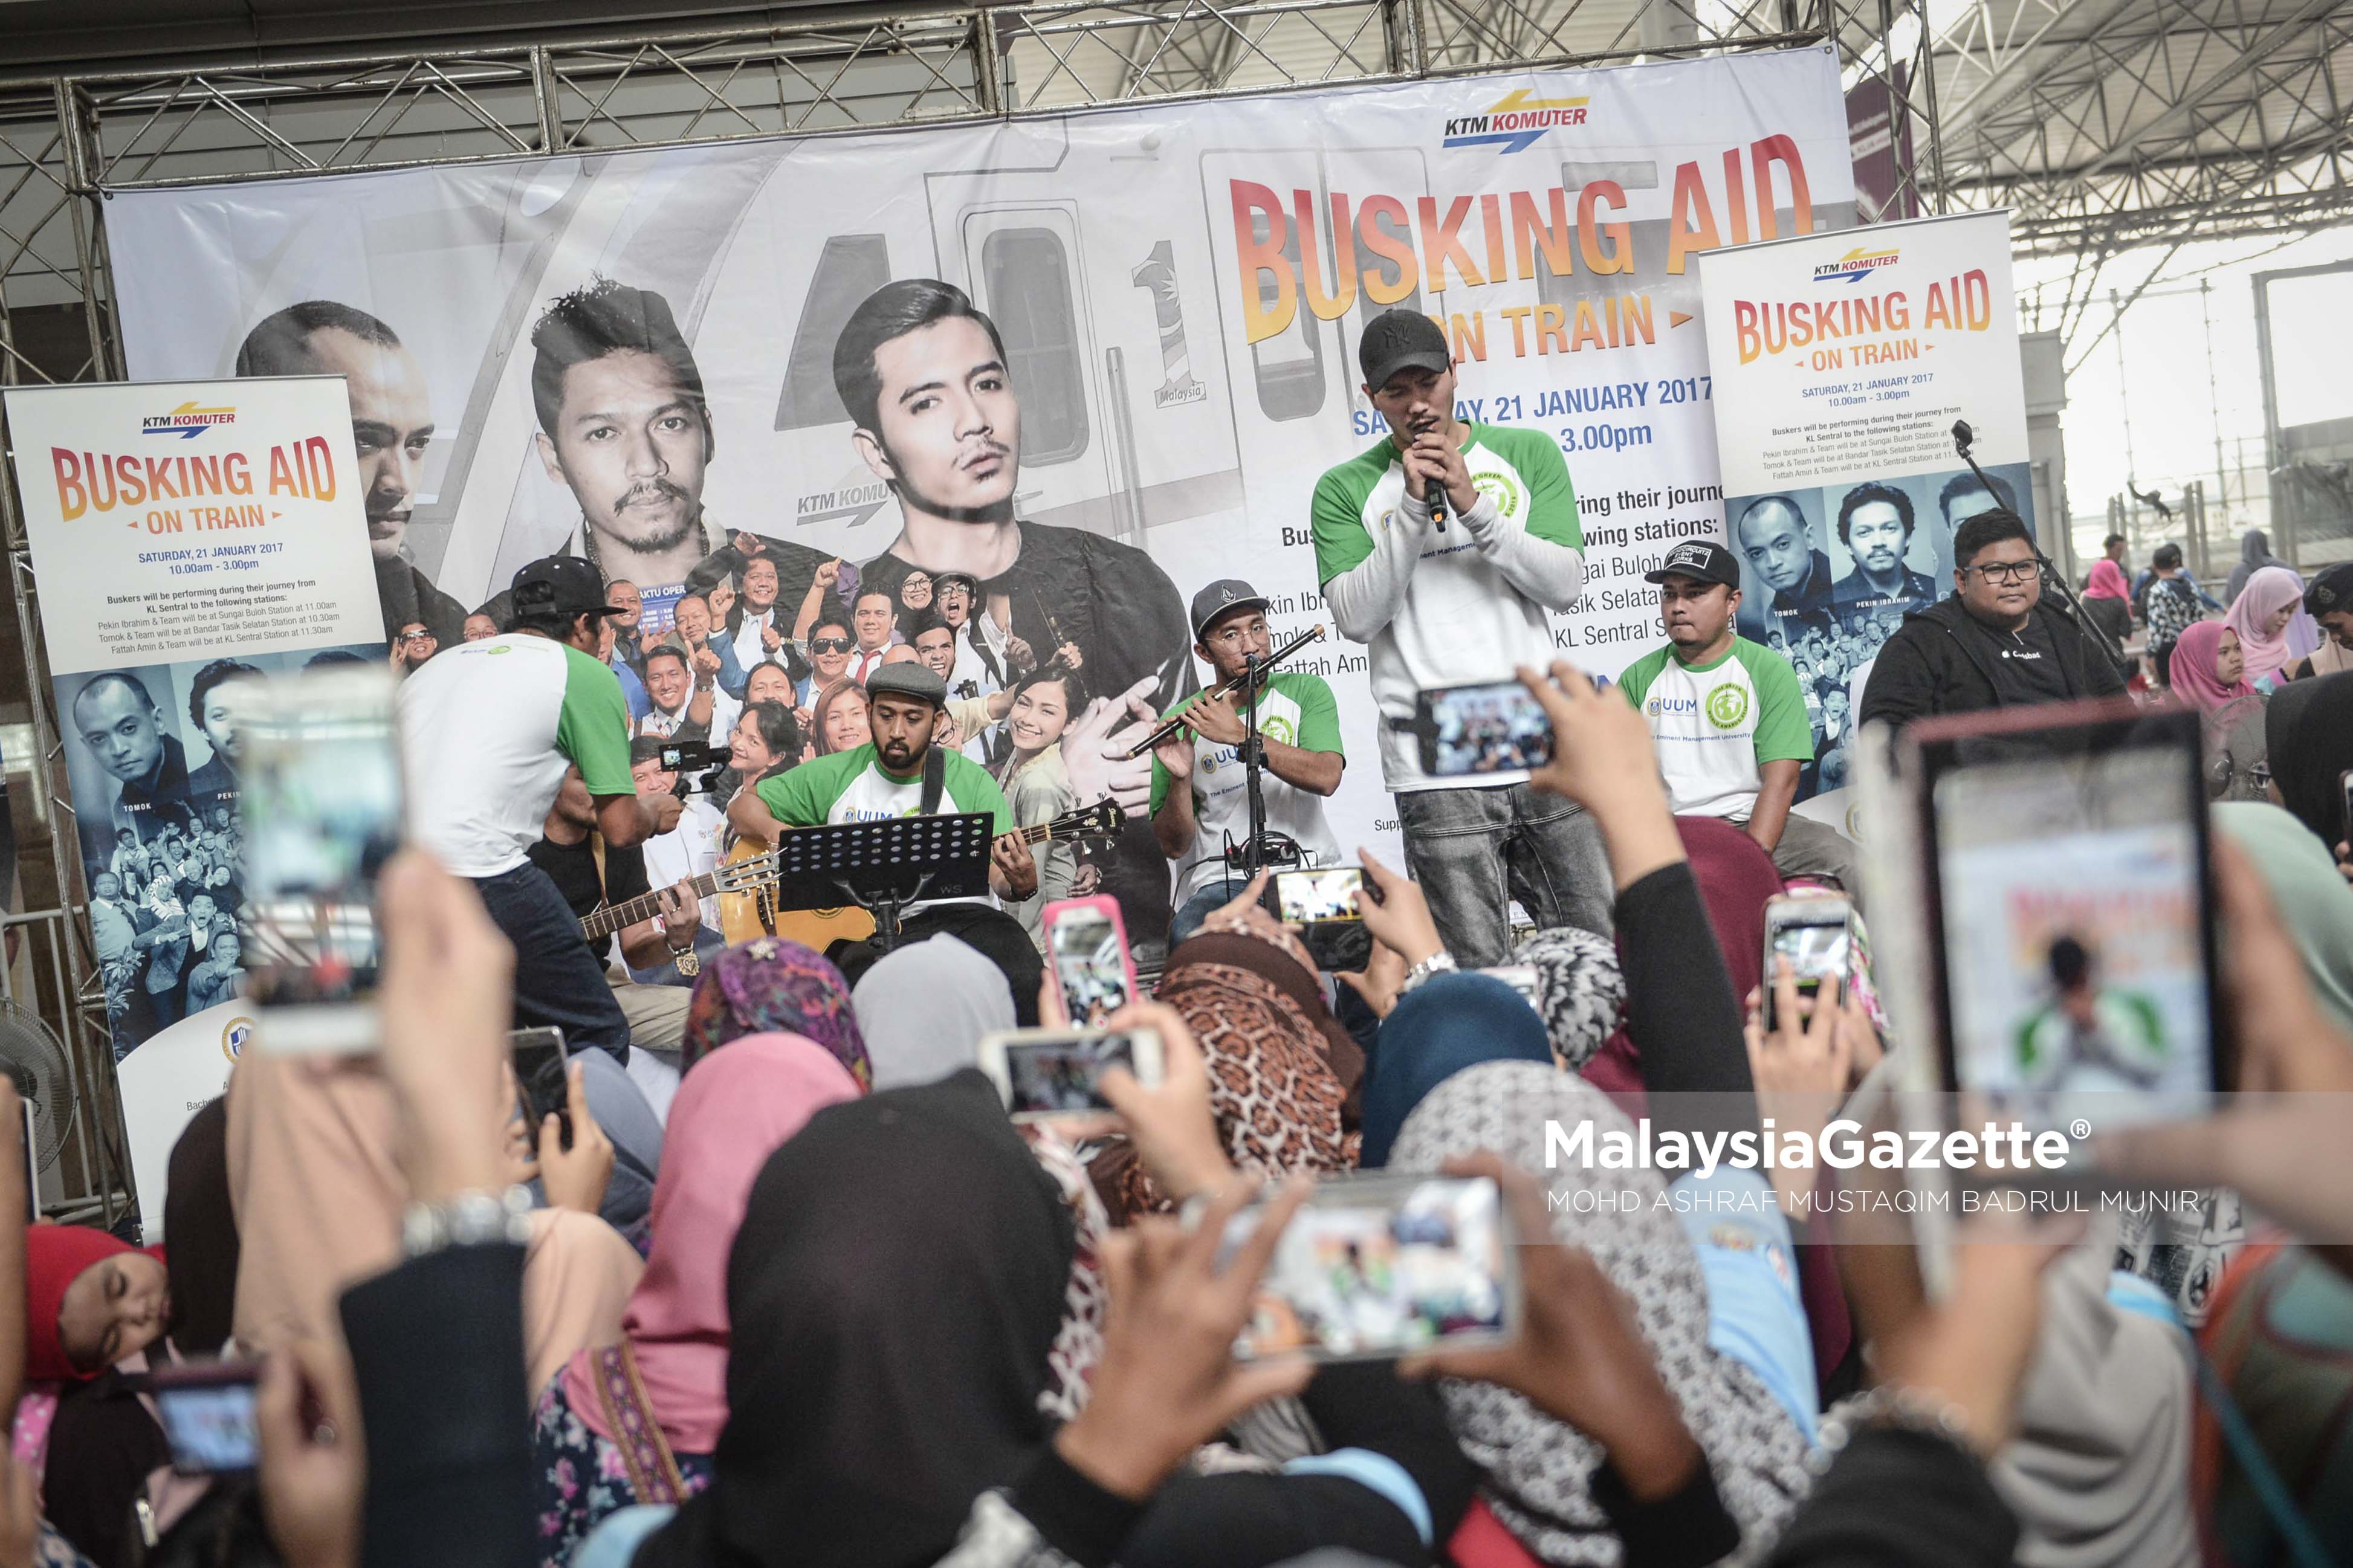 Fattah Amin turut serta menyanyikan lagu bagi menghiburkan orang ramai sambil mendapatkan derma untuk membantu anak yatim pada program Busking AId On Train di KL Sentral, Kuala Lumpur. foto ASHRAF MUSTAQIM BADRUL MUNIR, 21 JANUARI 2017.